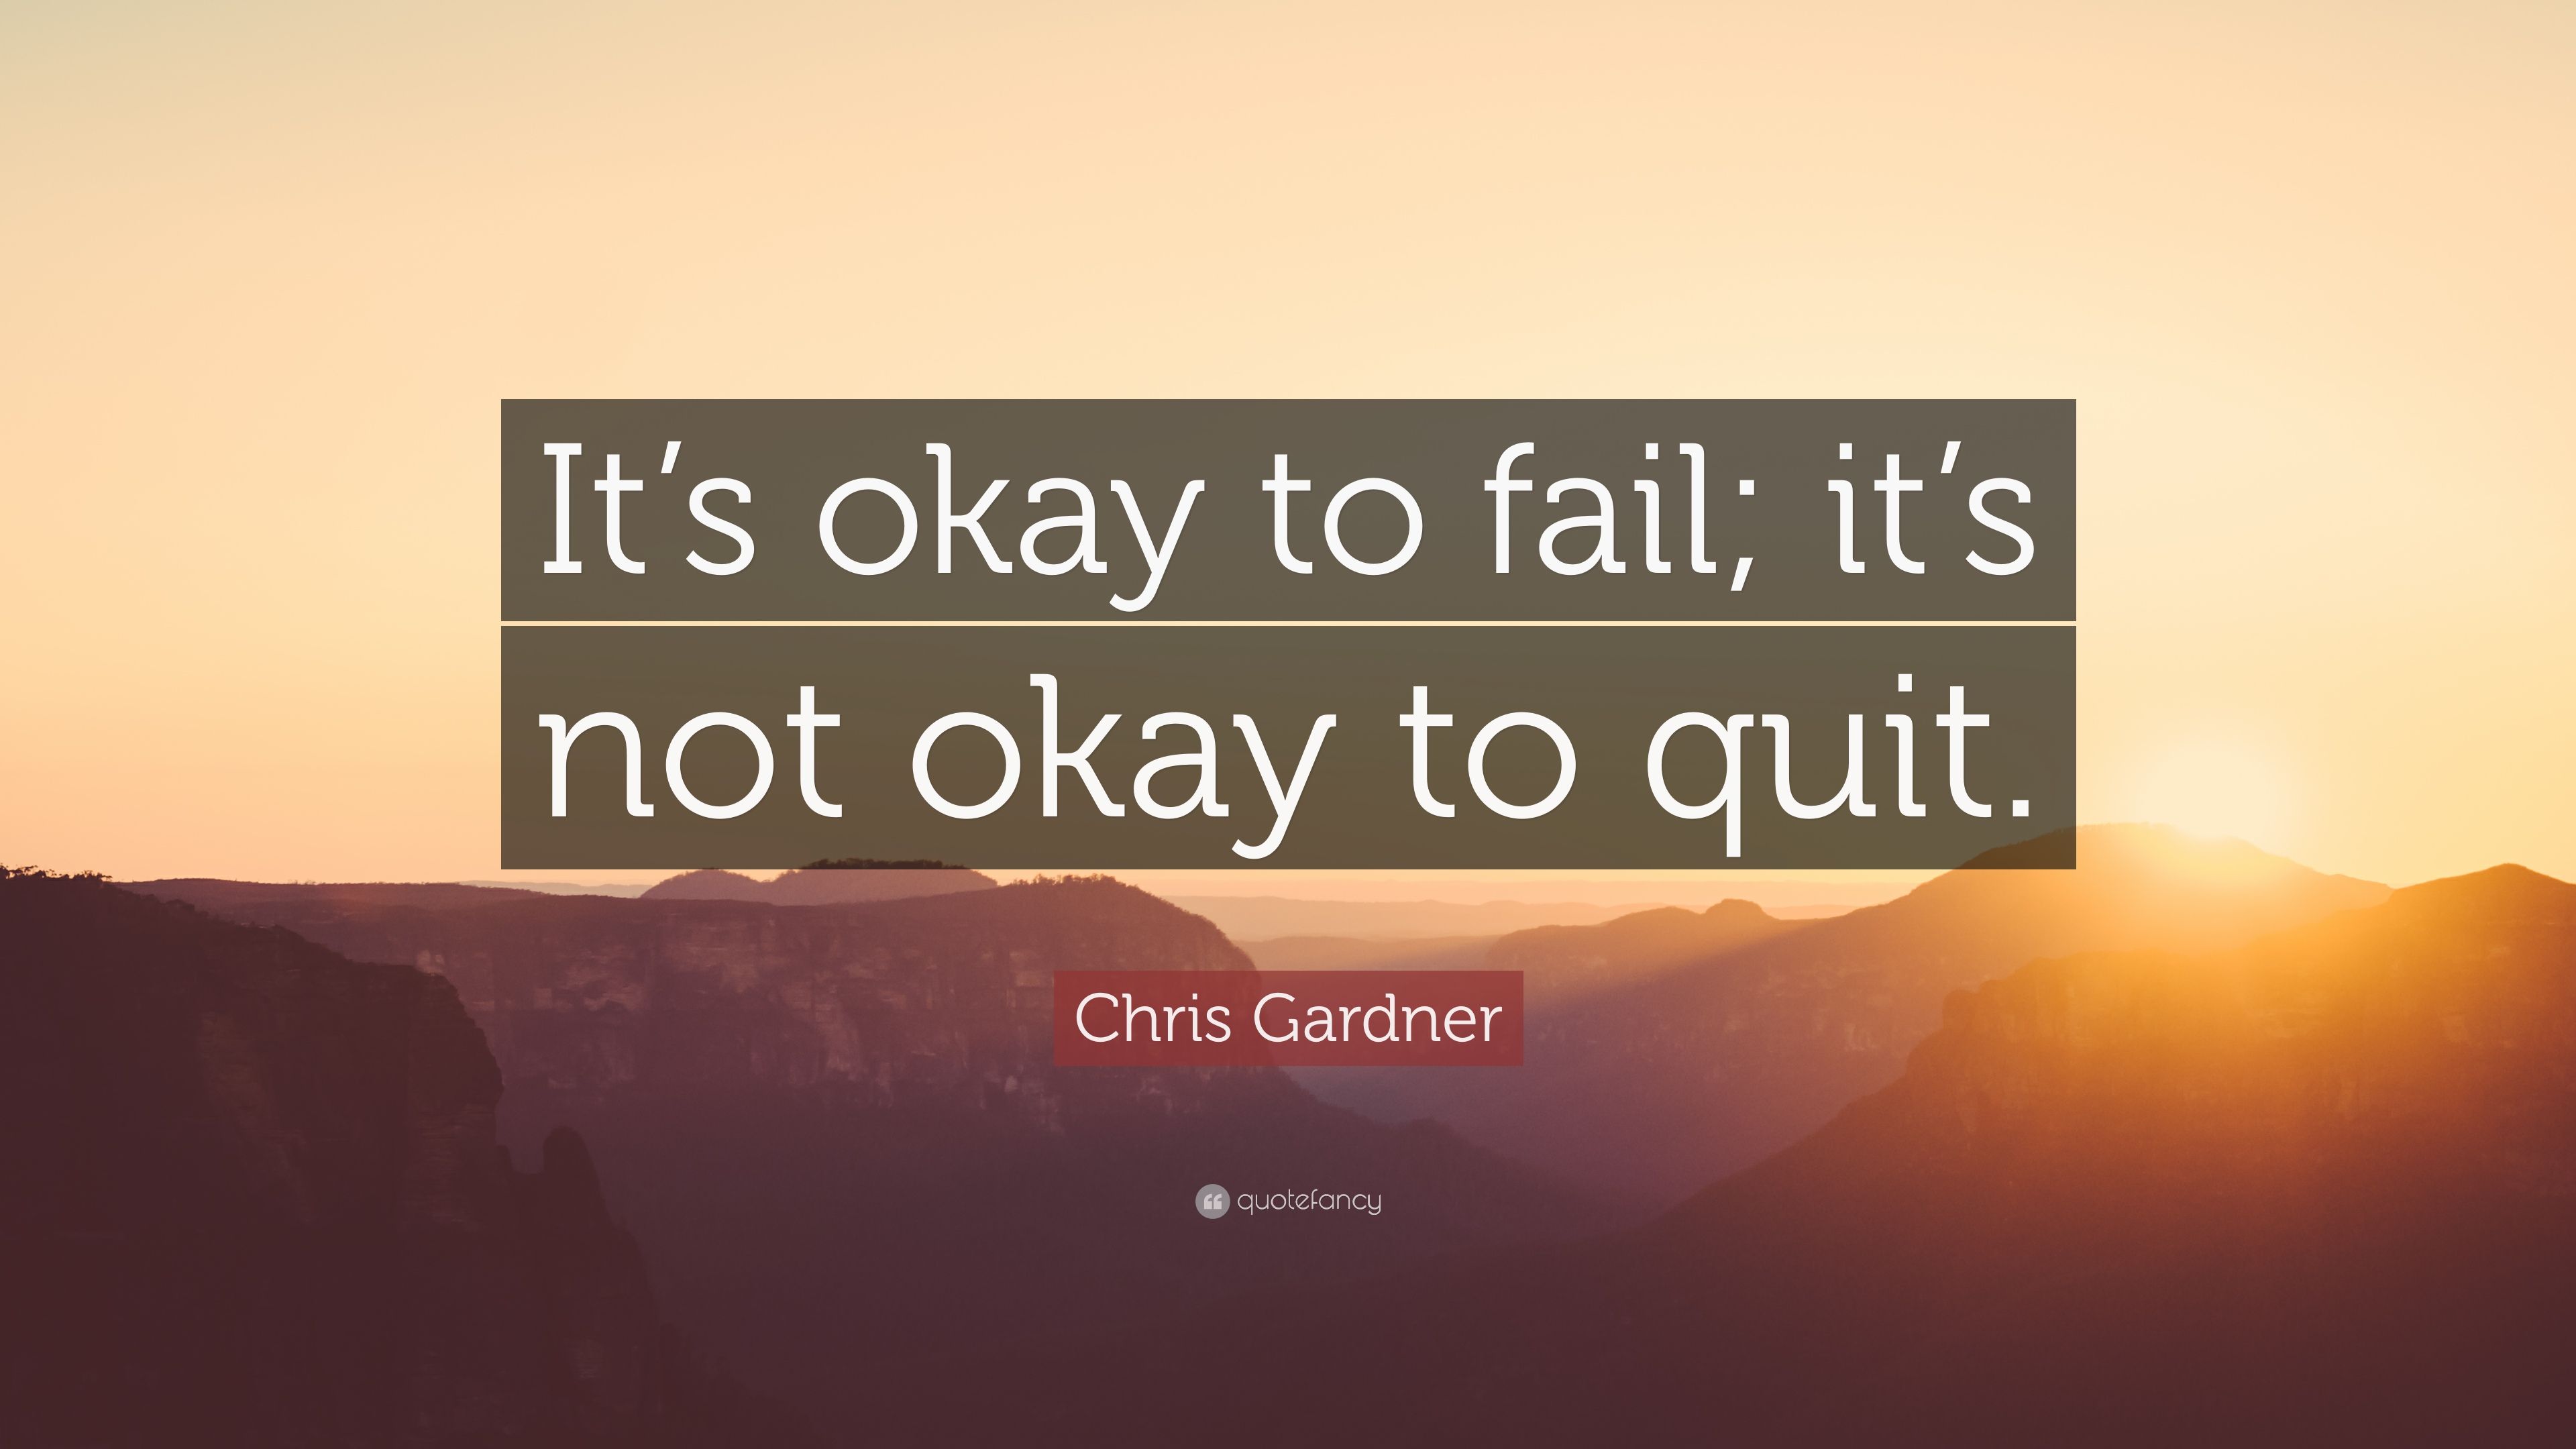 Chris Gardner Quote: “It's okay to fail; it's not okay to quit